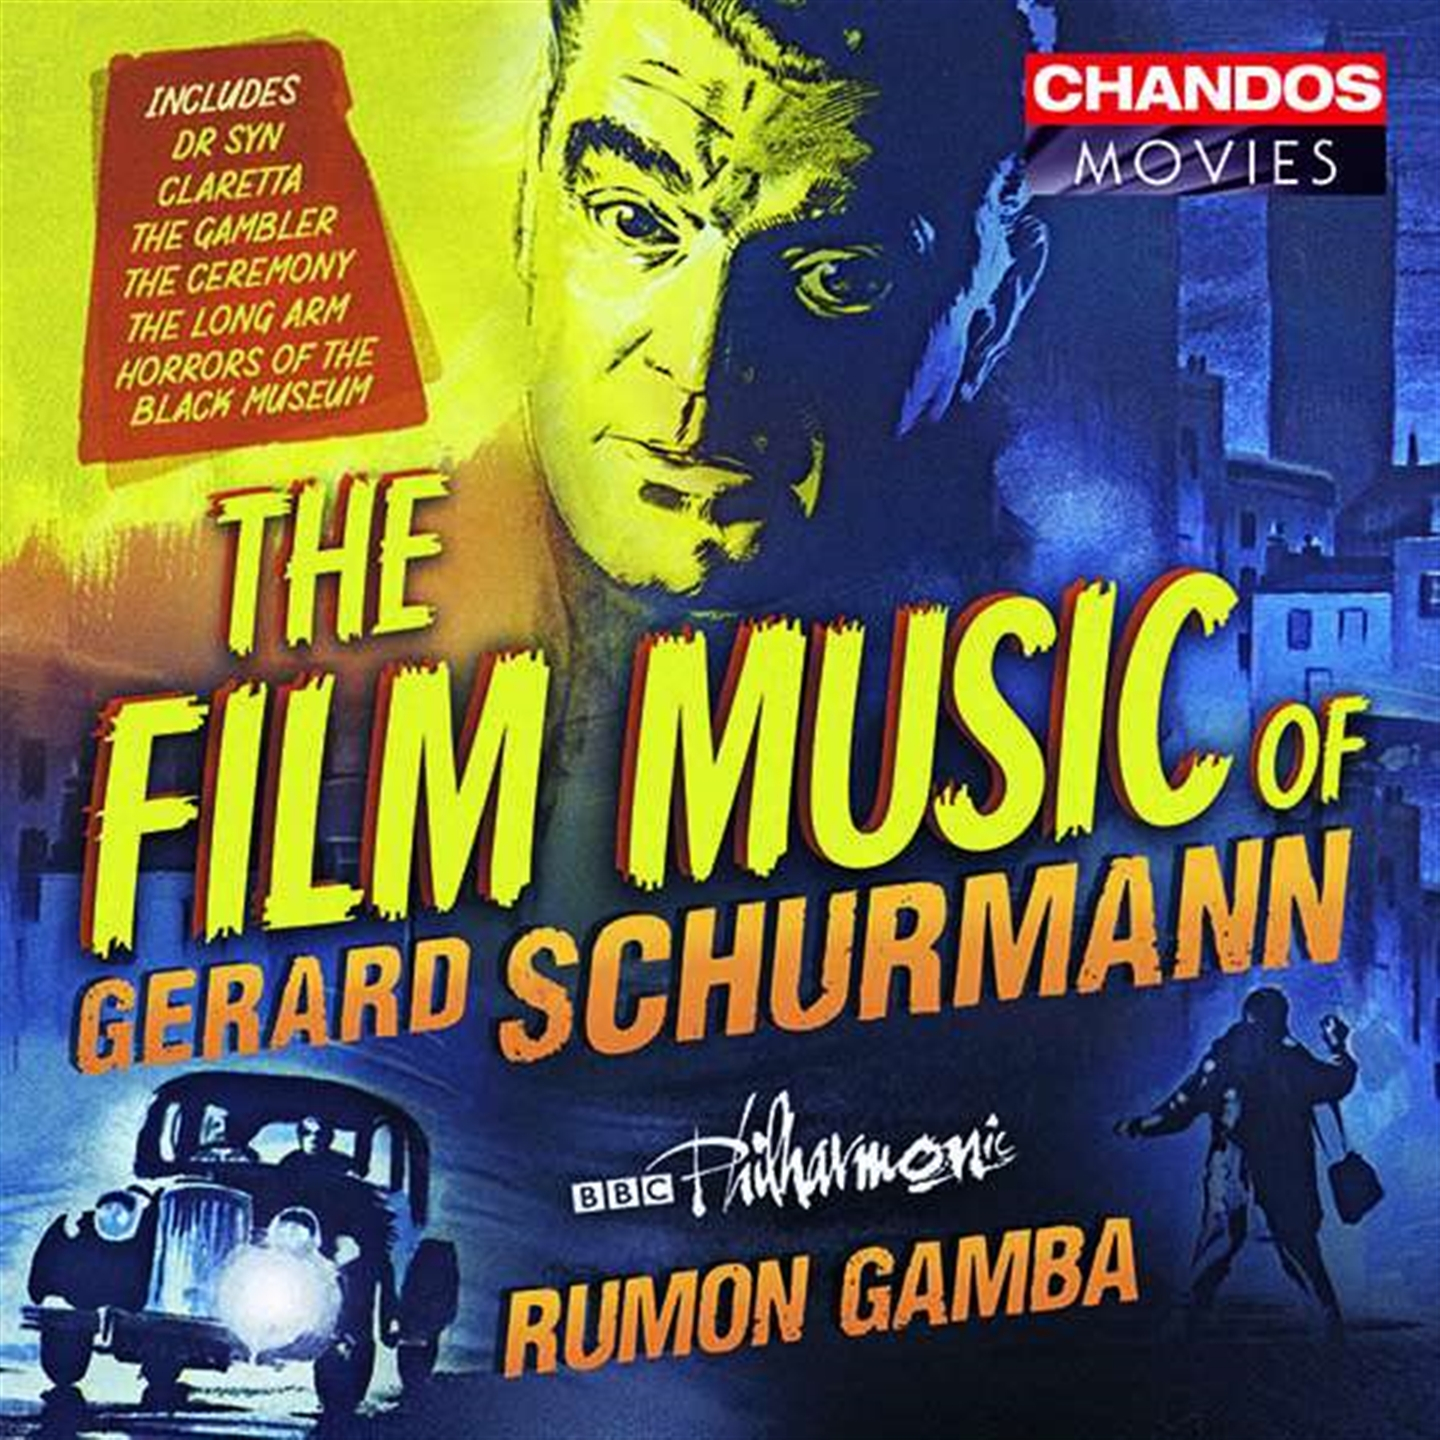 THE FILM MUSIC OF SCHURMANN